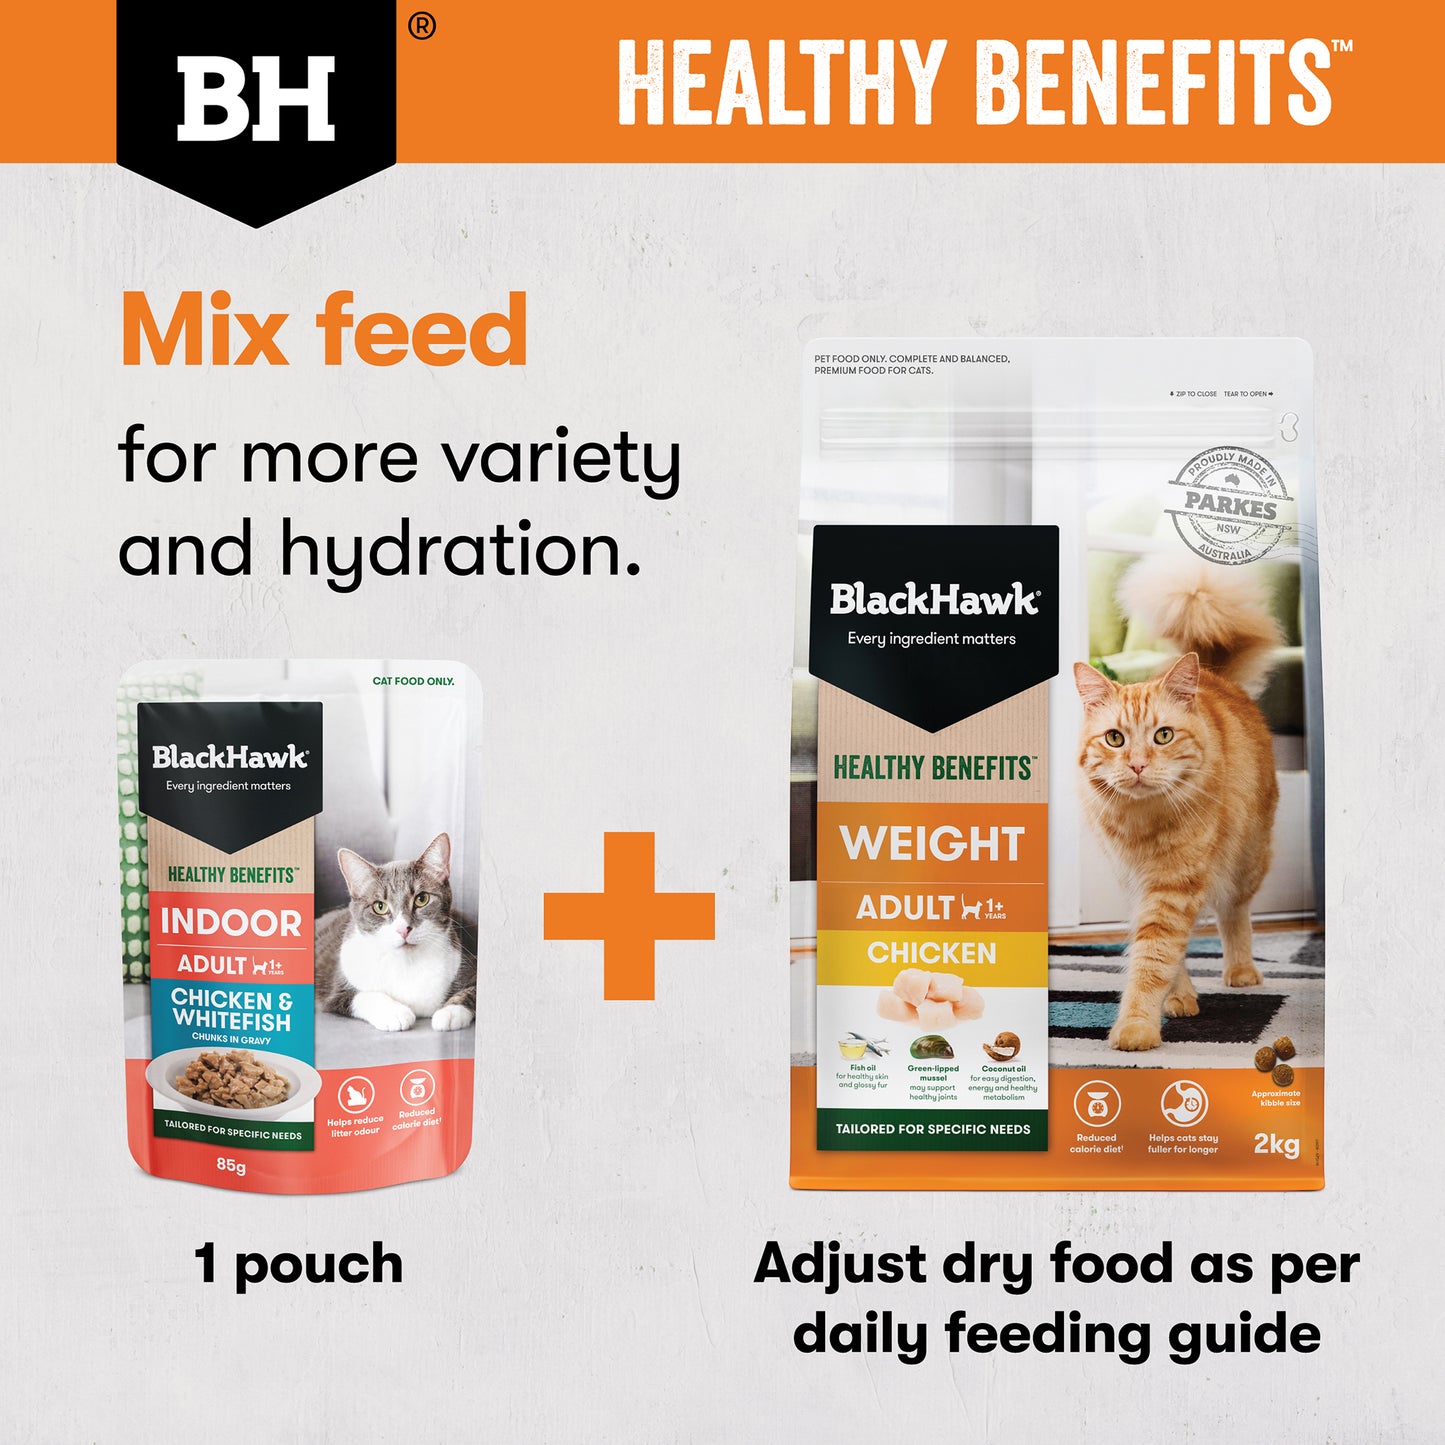 Black Hawk Healthy Benefits Chicken Weight Adult Dry Cat Food 4KG